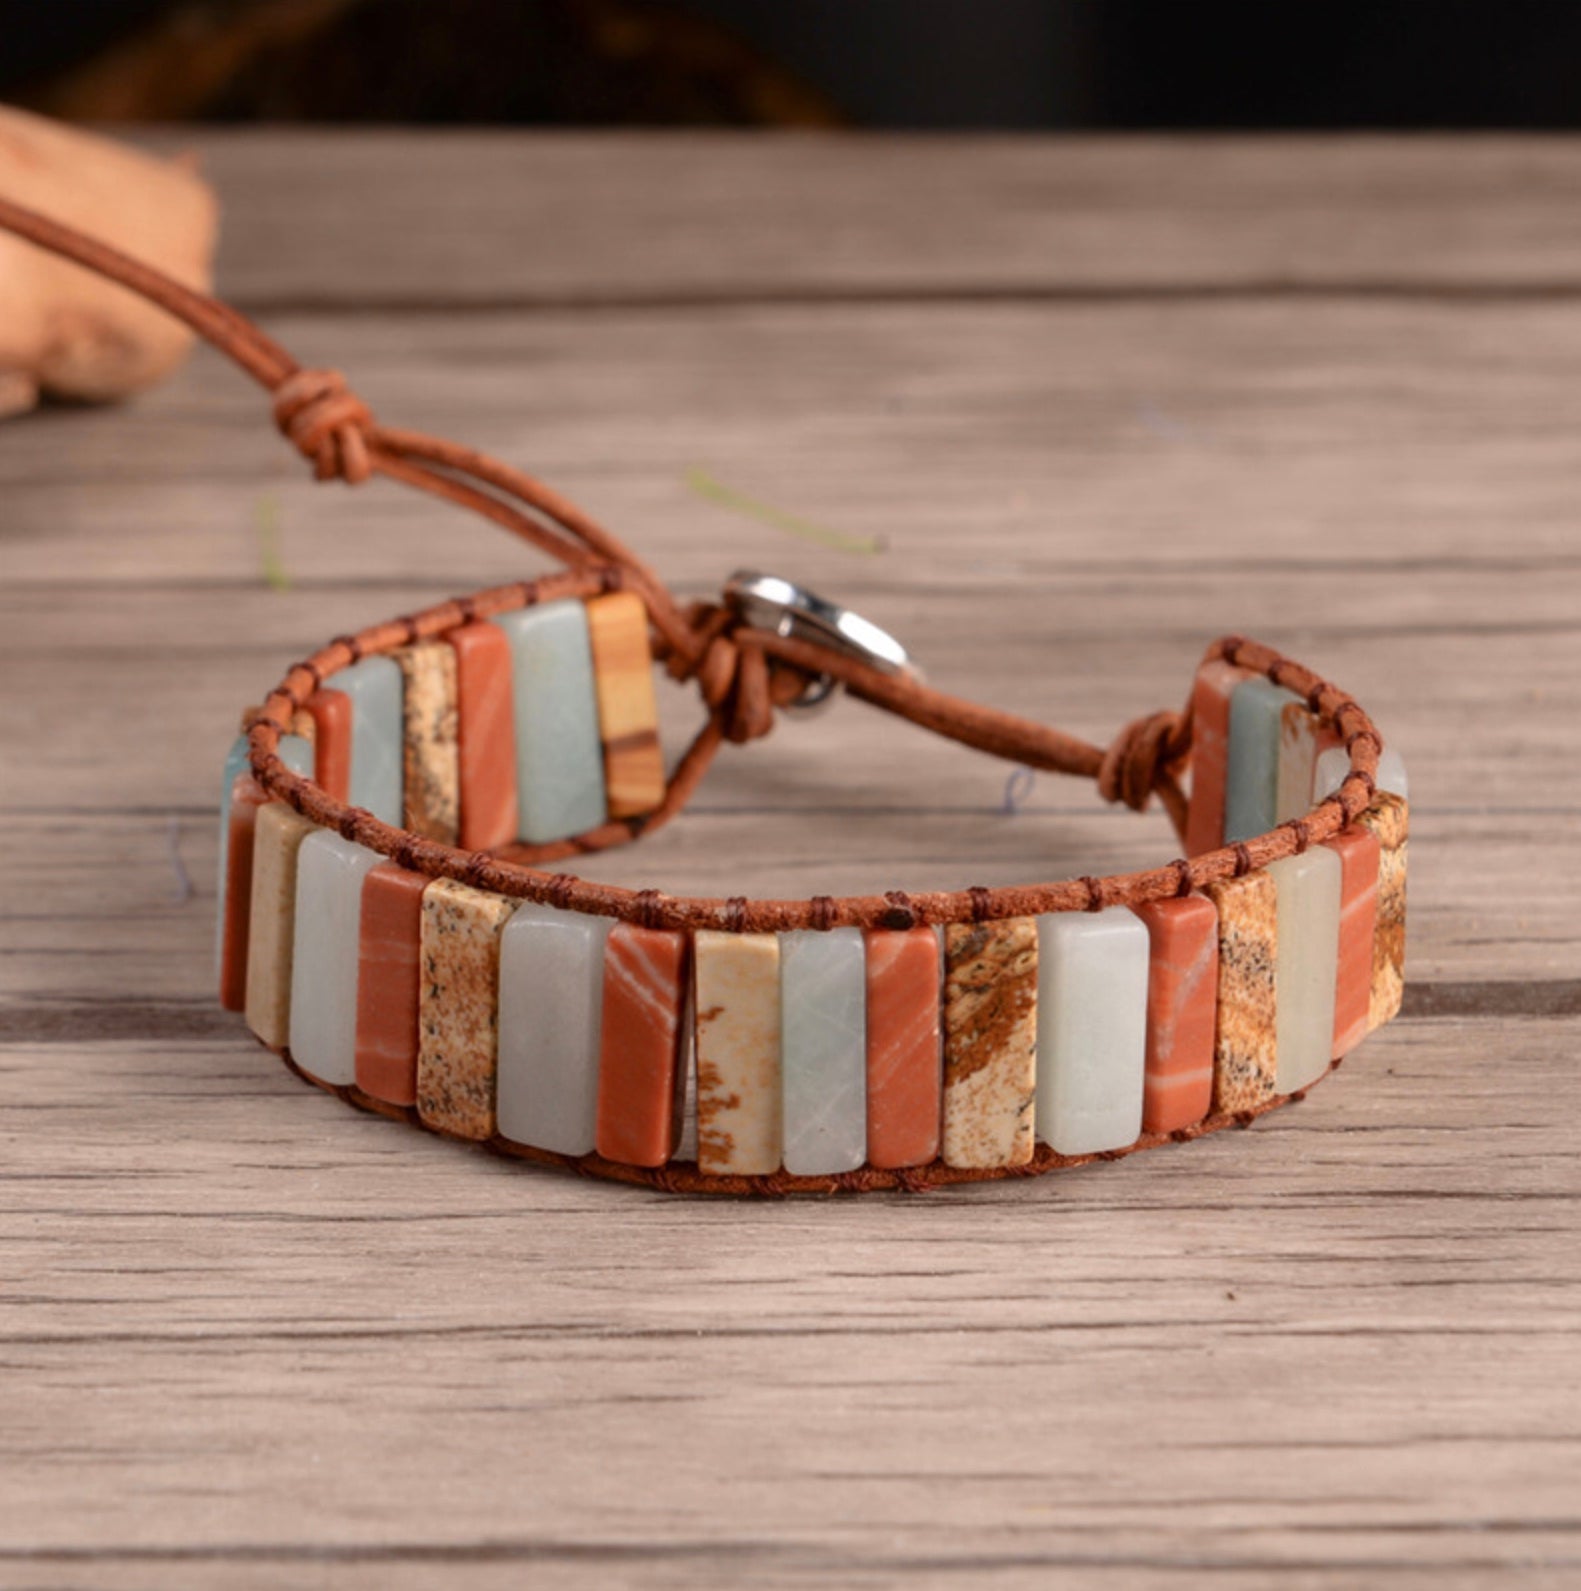 Stone Step Leather Bracelet Kit with Dakota Stones Gemstones